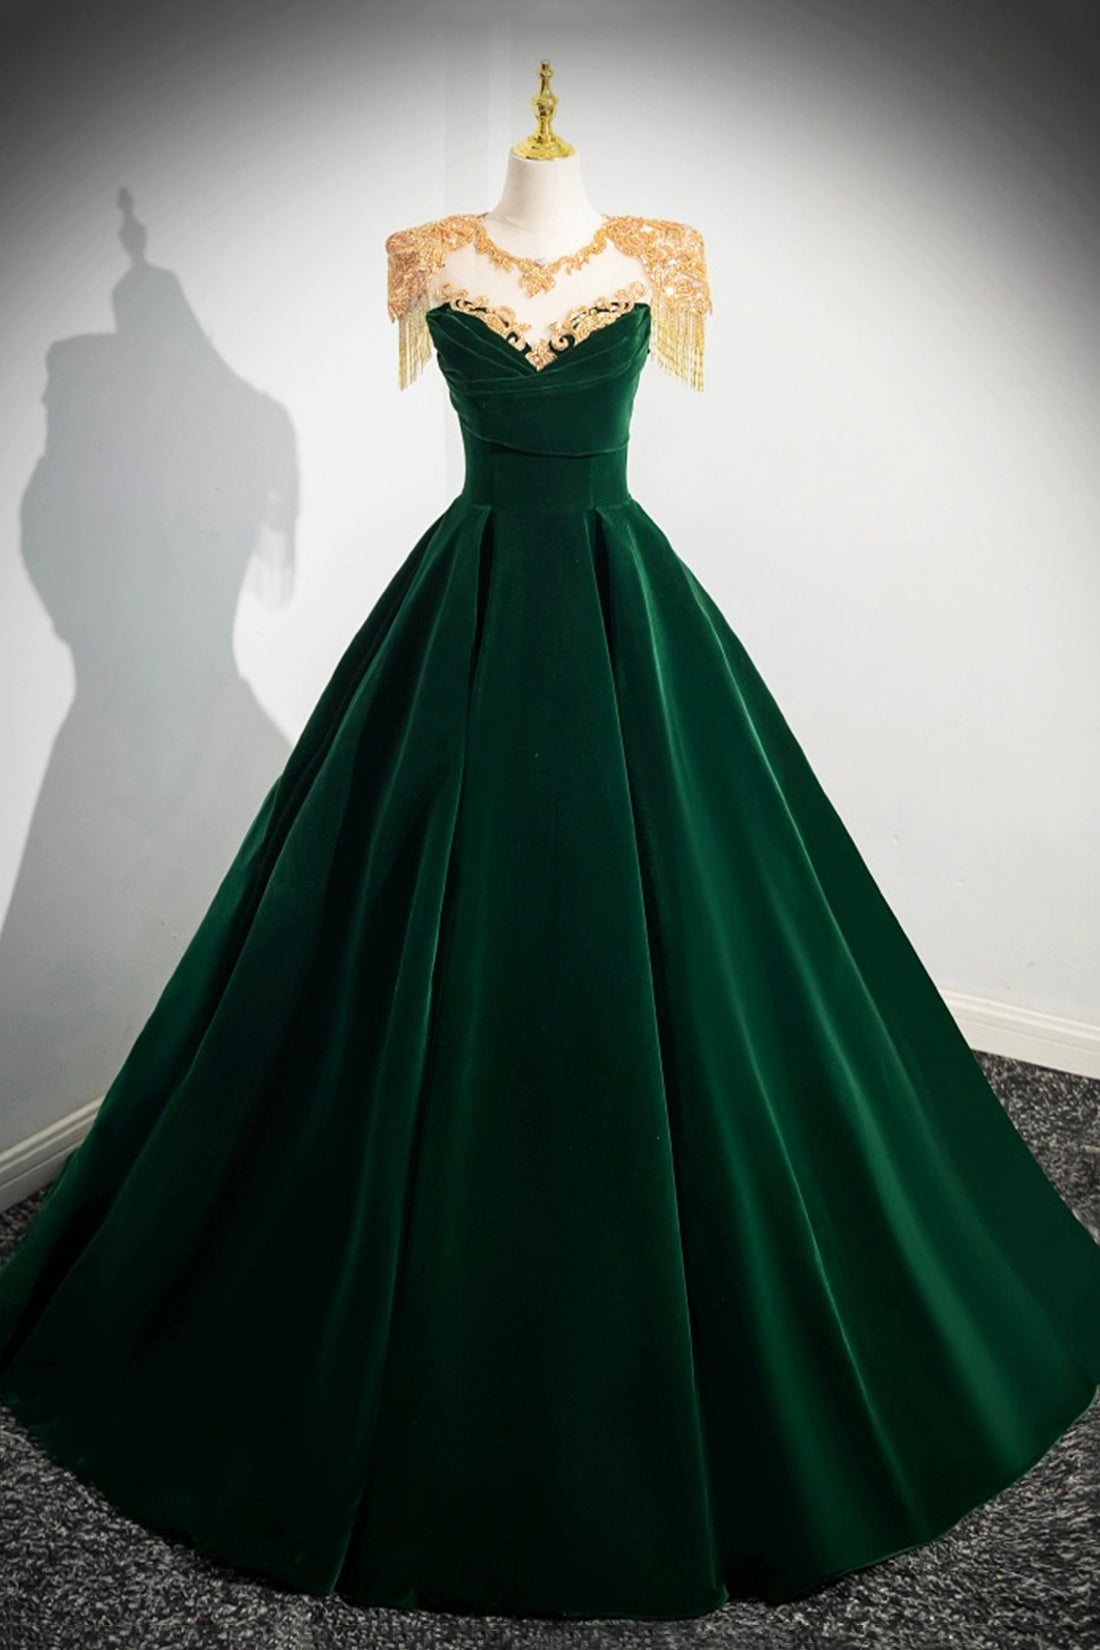 Emerald Green Velvet Dress Elegant Wedding Evening Party Long Sleeve Prom  Dress